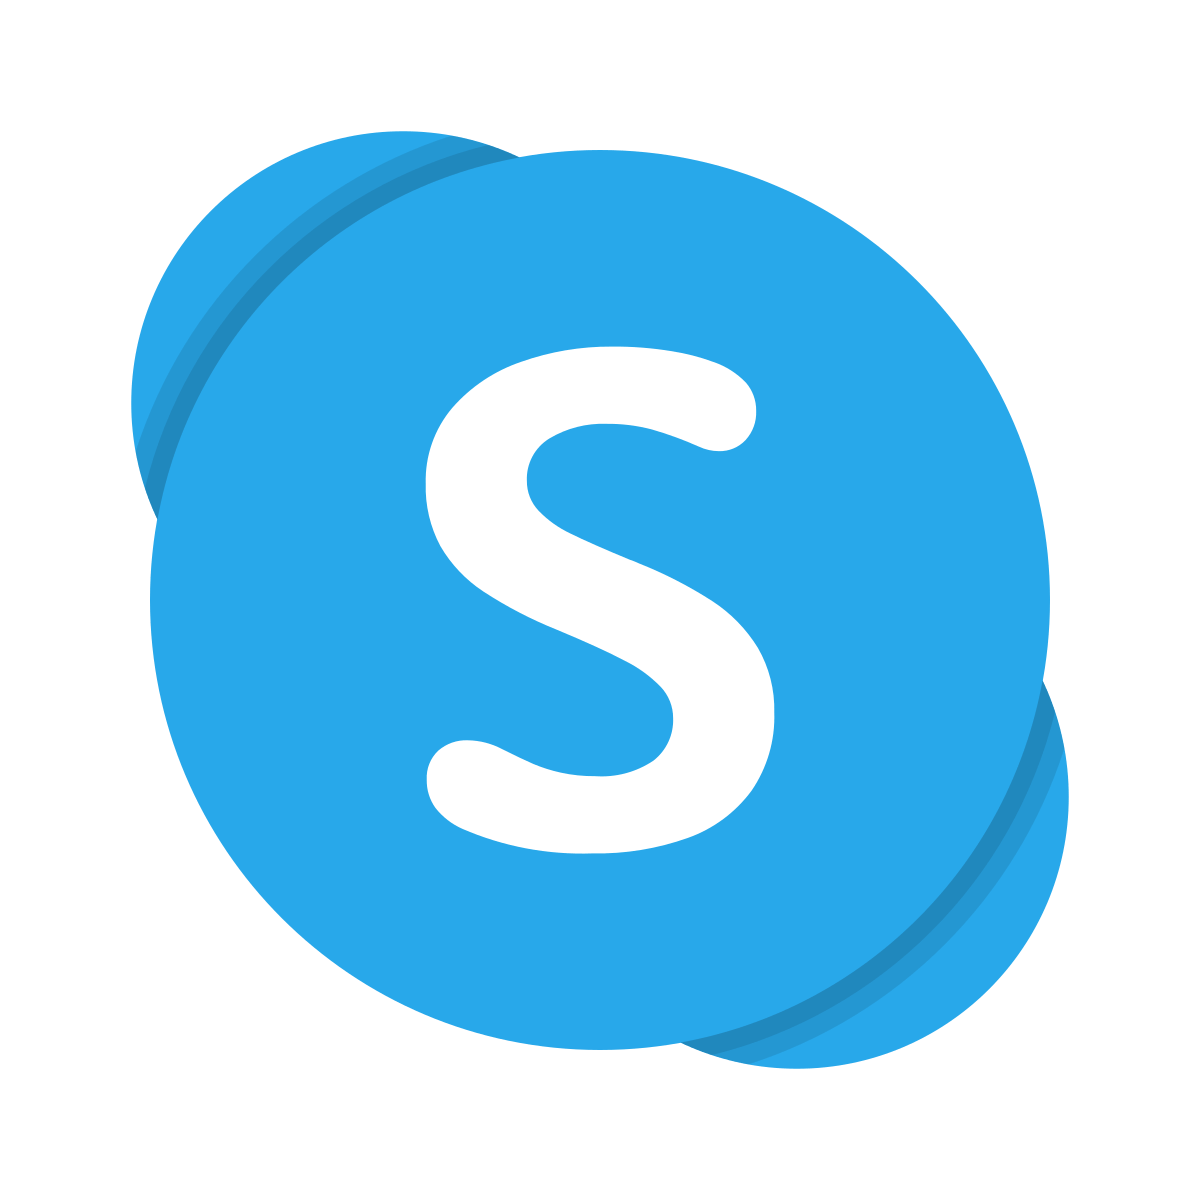 share screens on skype for mac